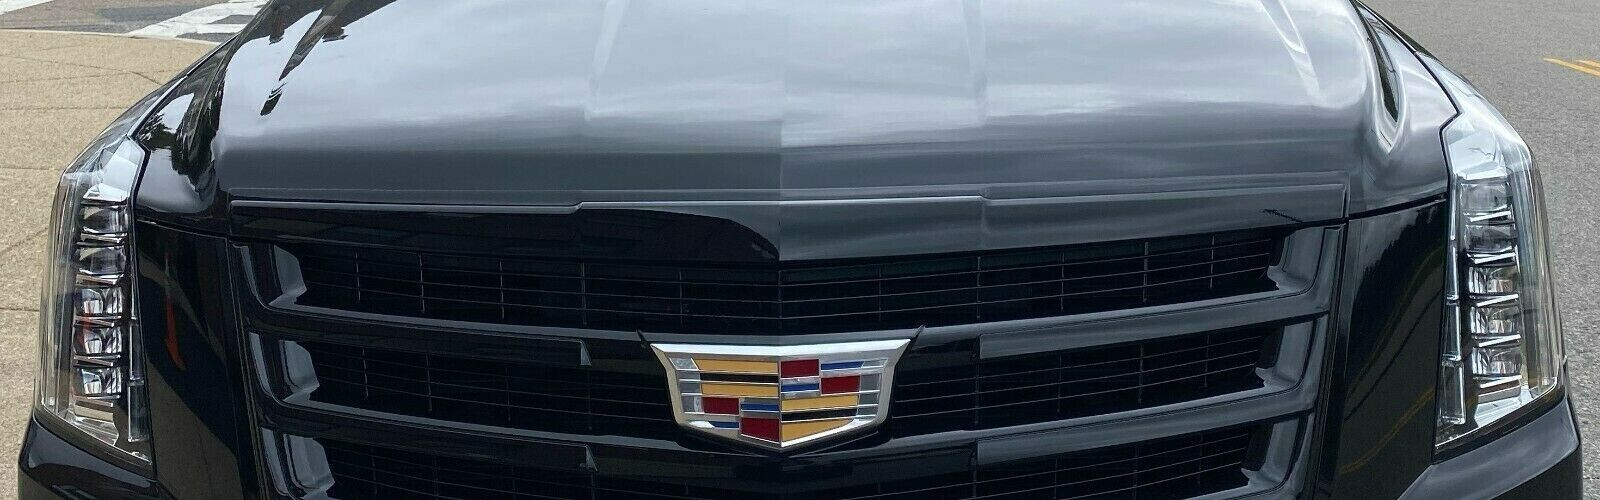 GM OEM Cadillac Escalade 2015-2020 Black Hood Trim Molding Generation 4 New